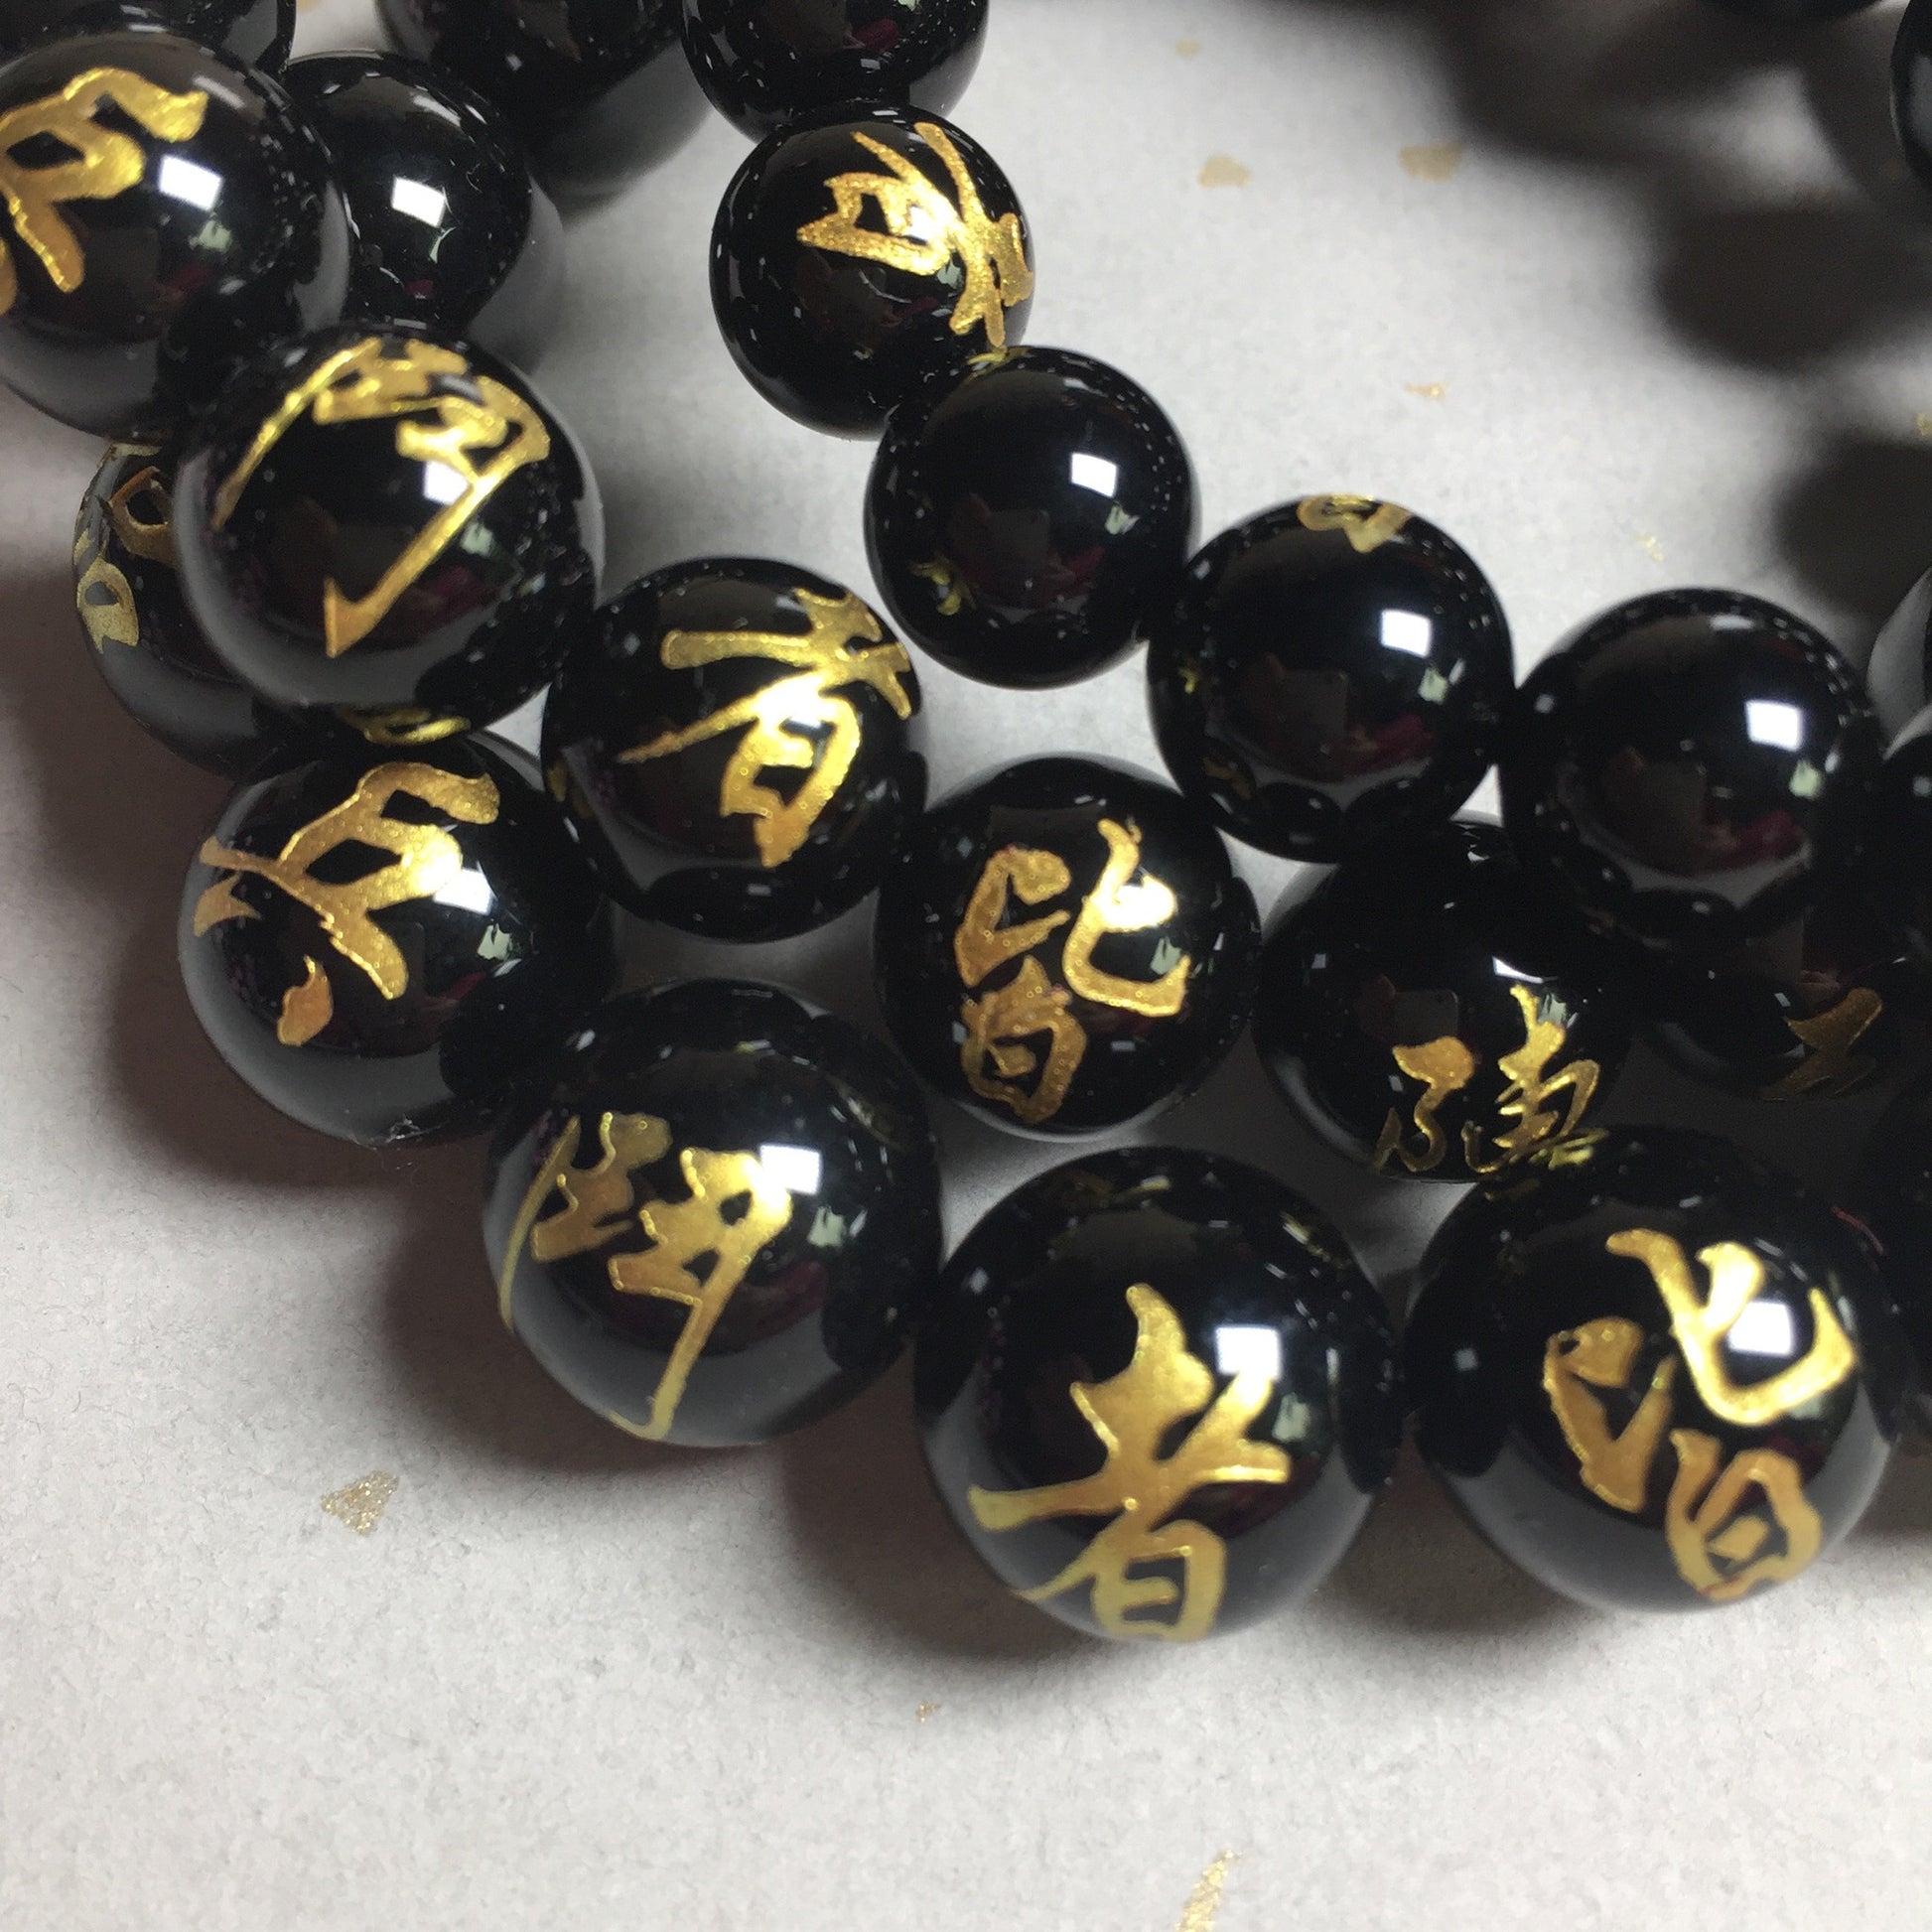 Ninja 9 Hand Seals Black Onyx Mens Bracelet, Japanese Ninja Kanji Beaded Bracelet (Q) Large:14mm Beads Separated Style 2